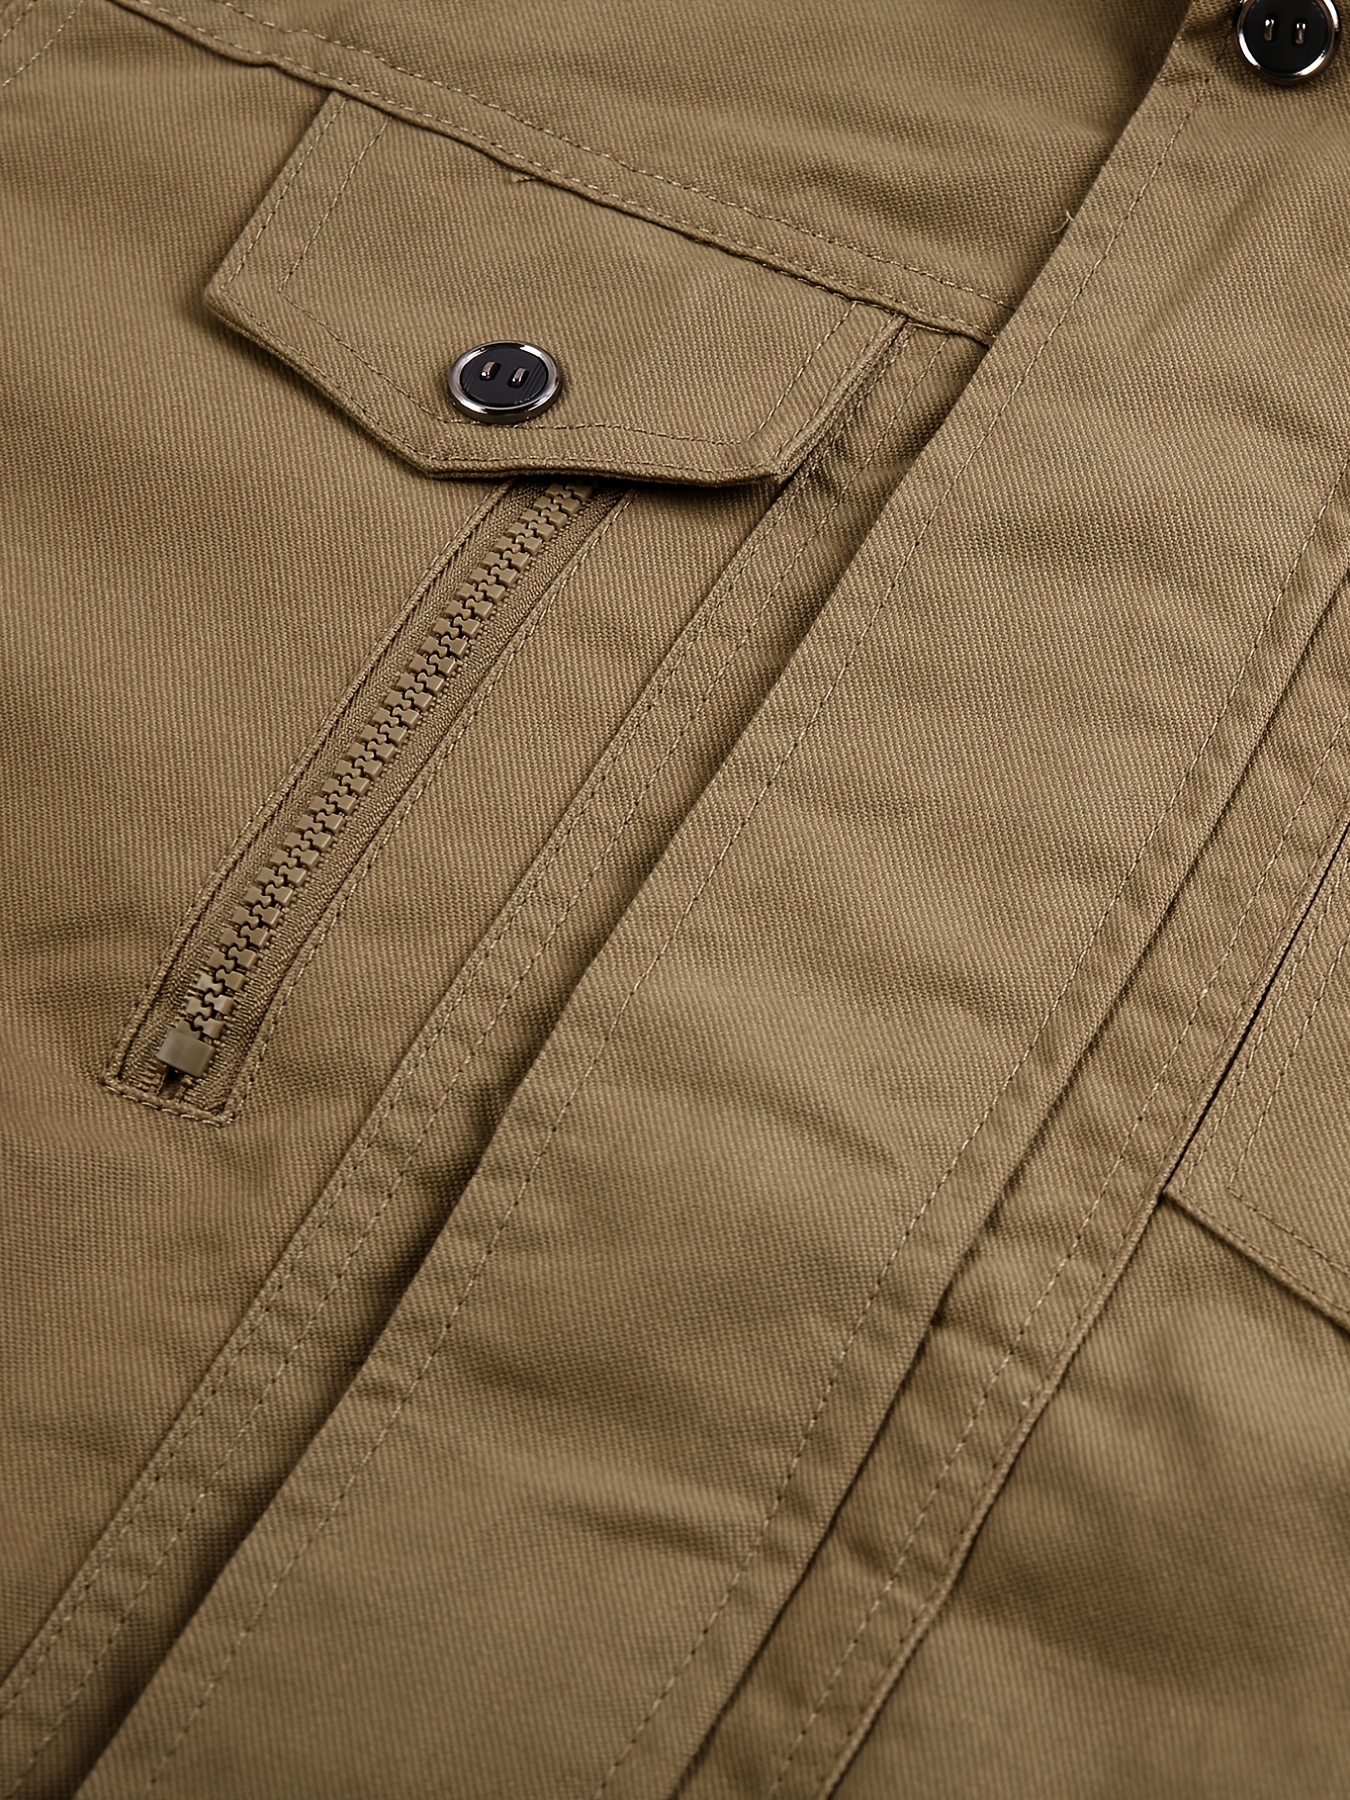 Men's Cotton Lightweight Multi Pockets Zip Front Stand Collar Military ...